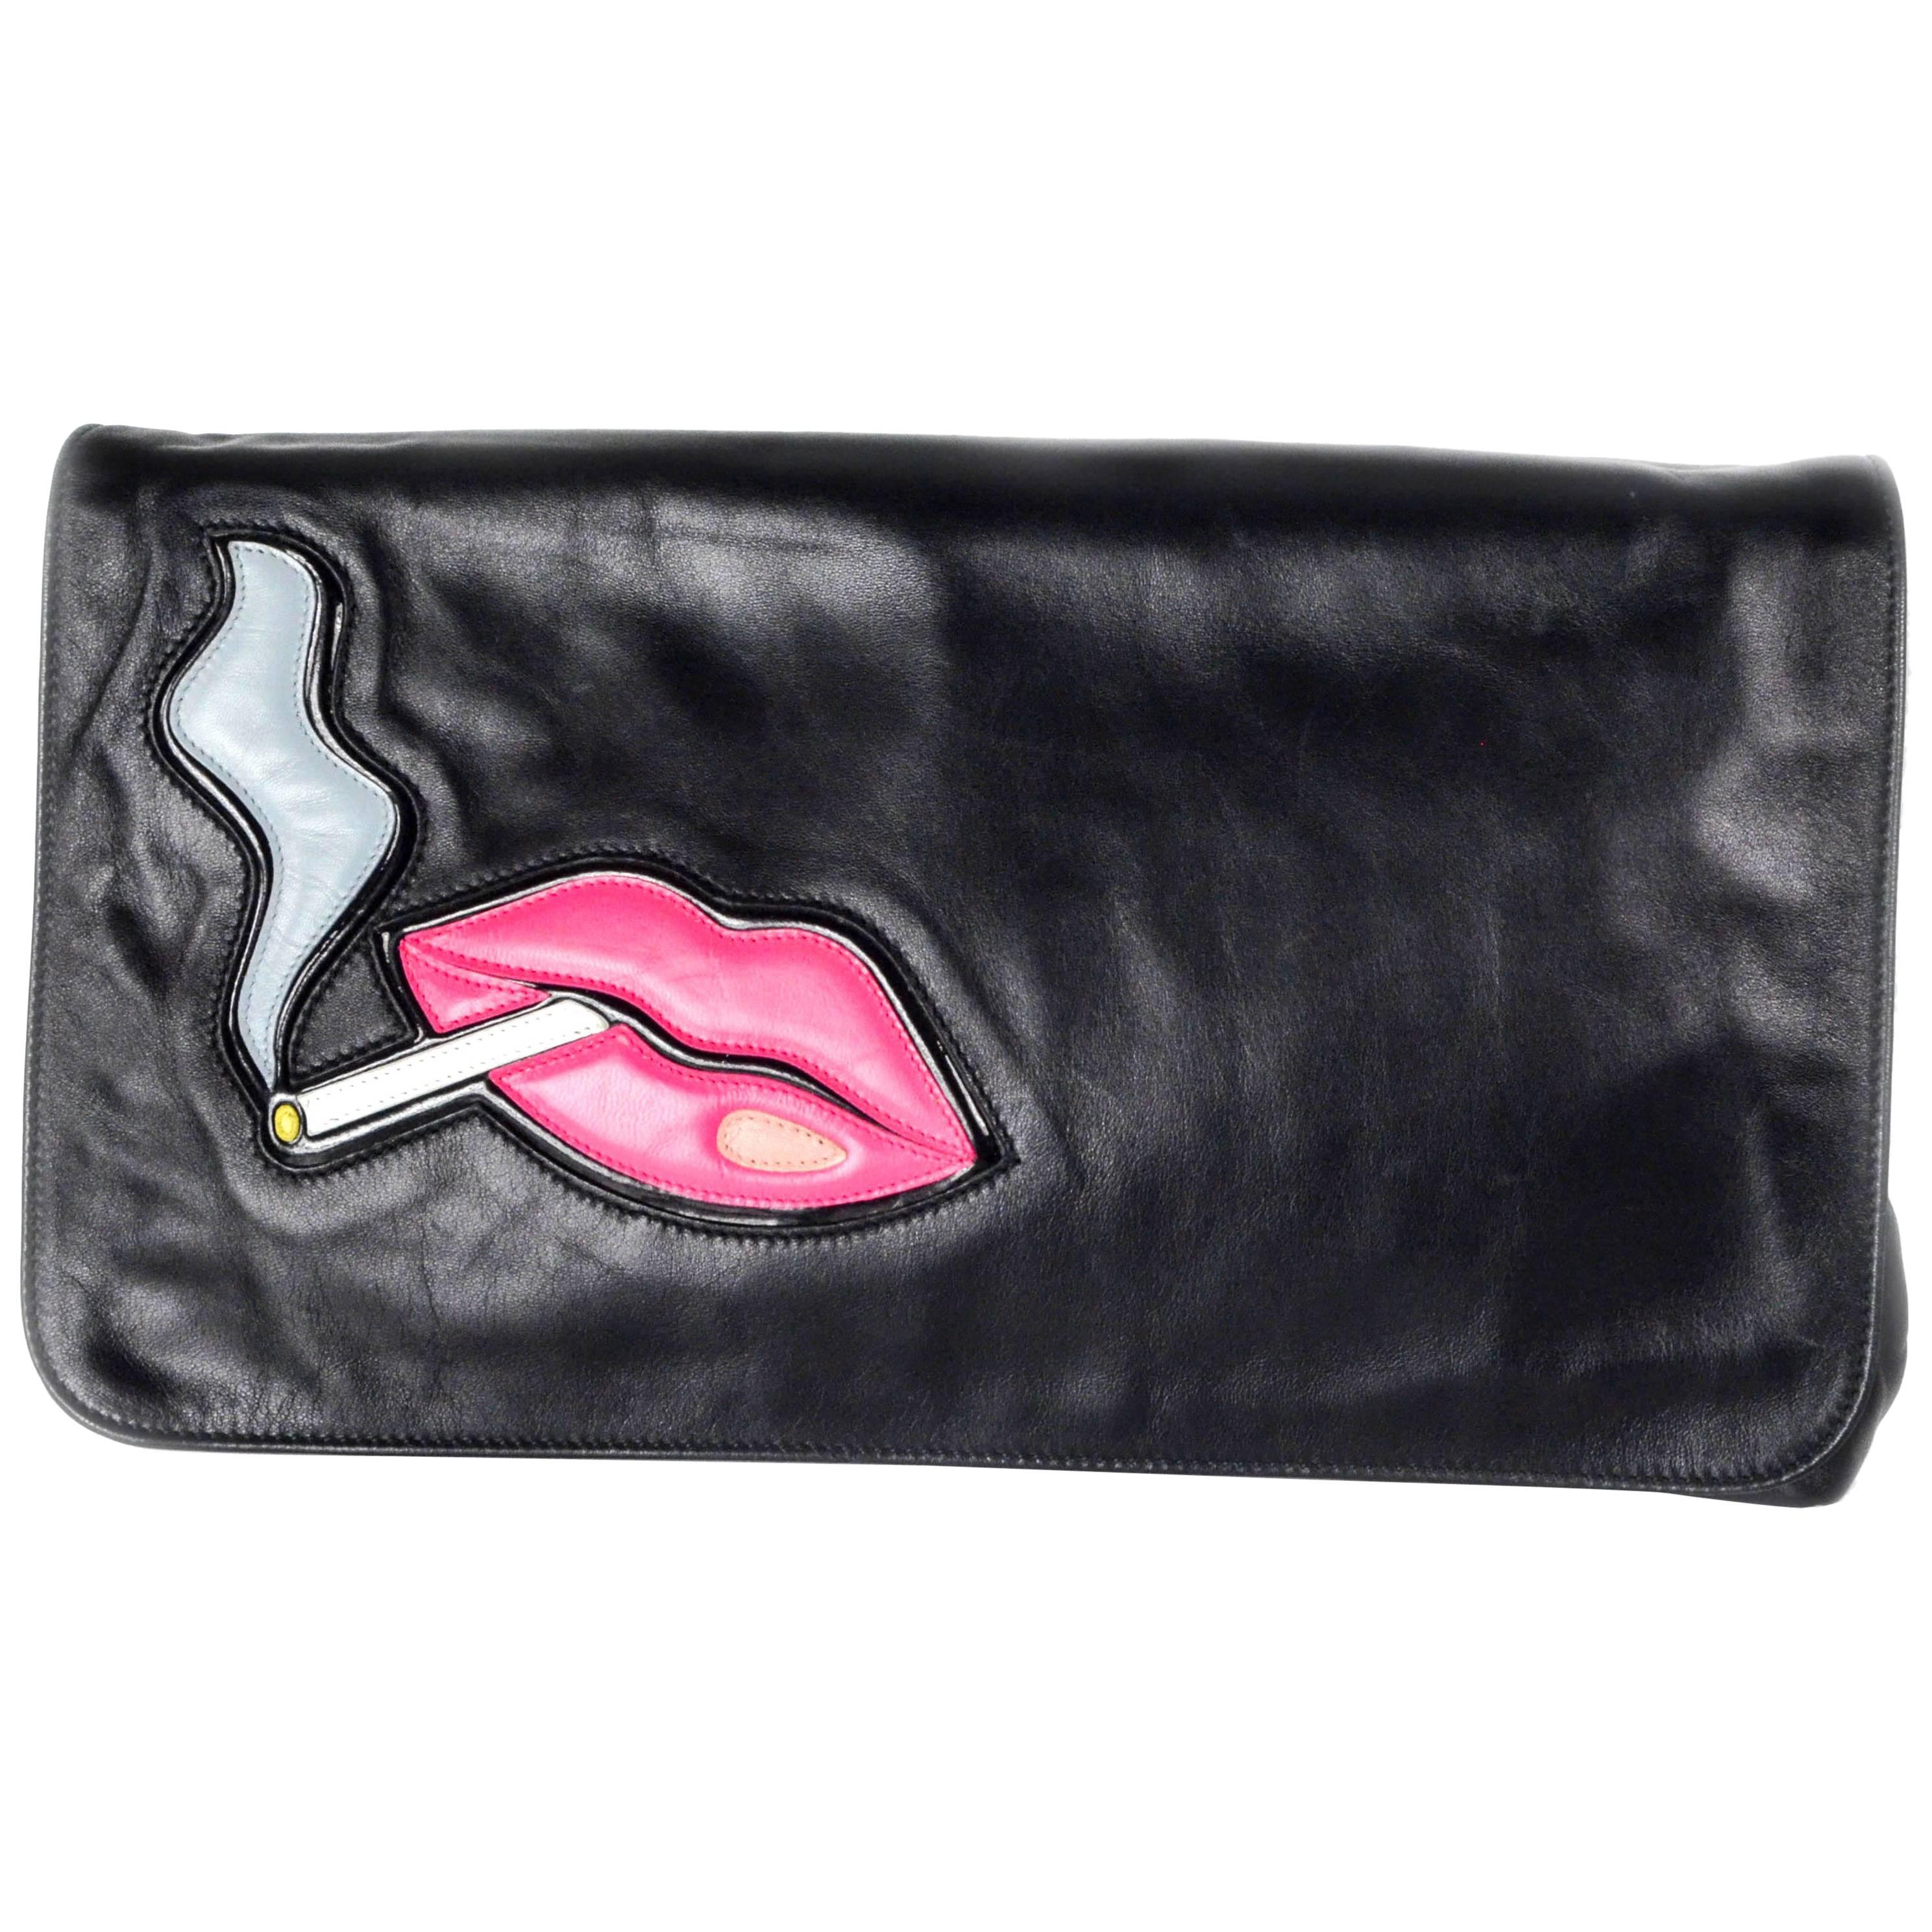 Prada Smoking Lips Large Clutch Bag - Black Leather Kiss Handbag Pink